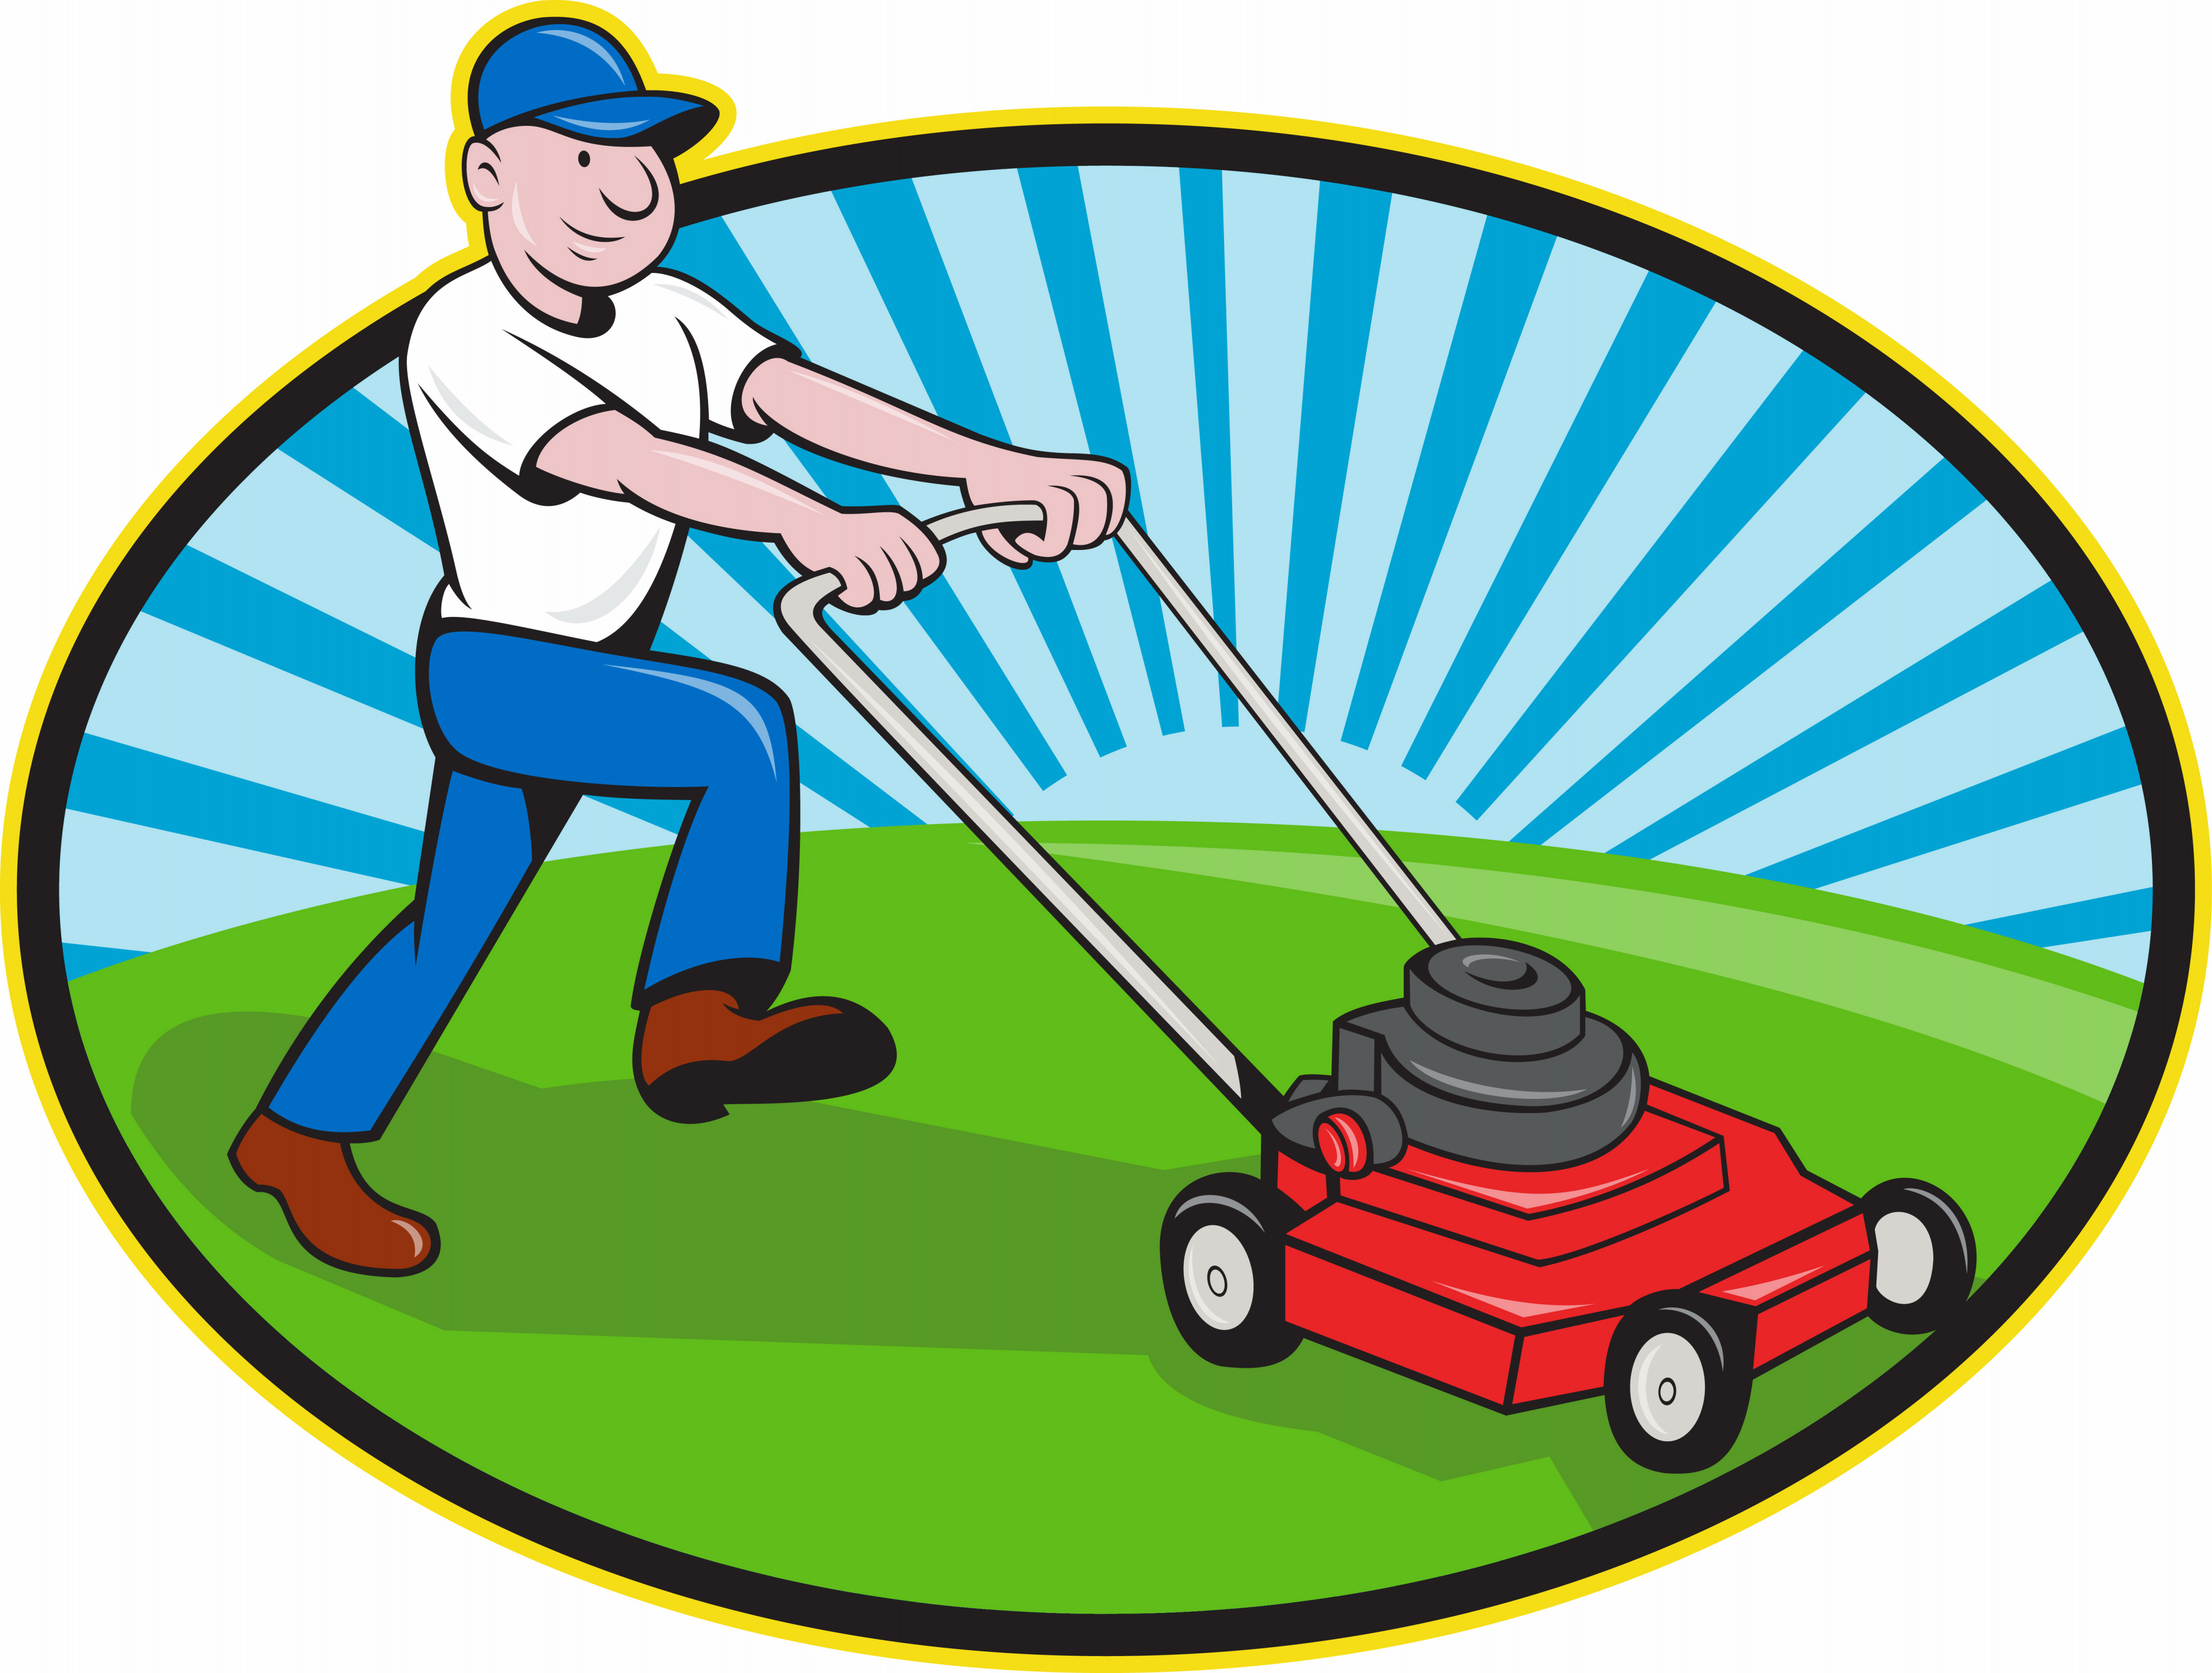 Lawn Mower Man Gardener Cartoon